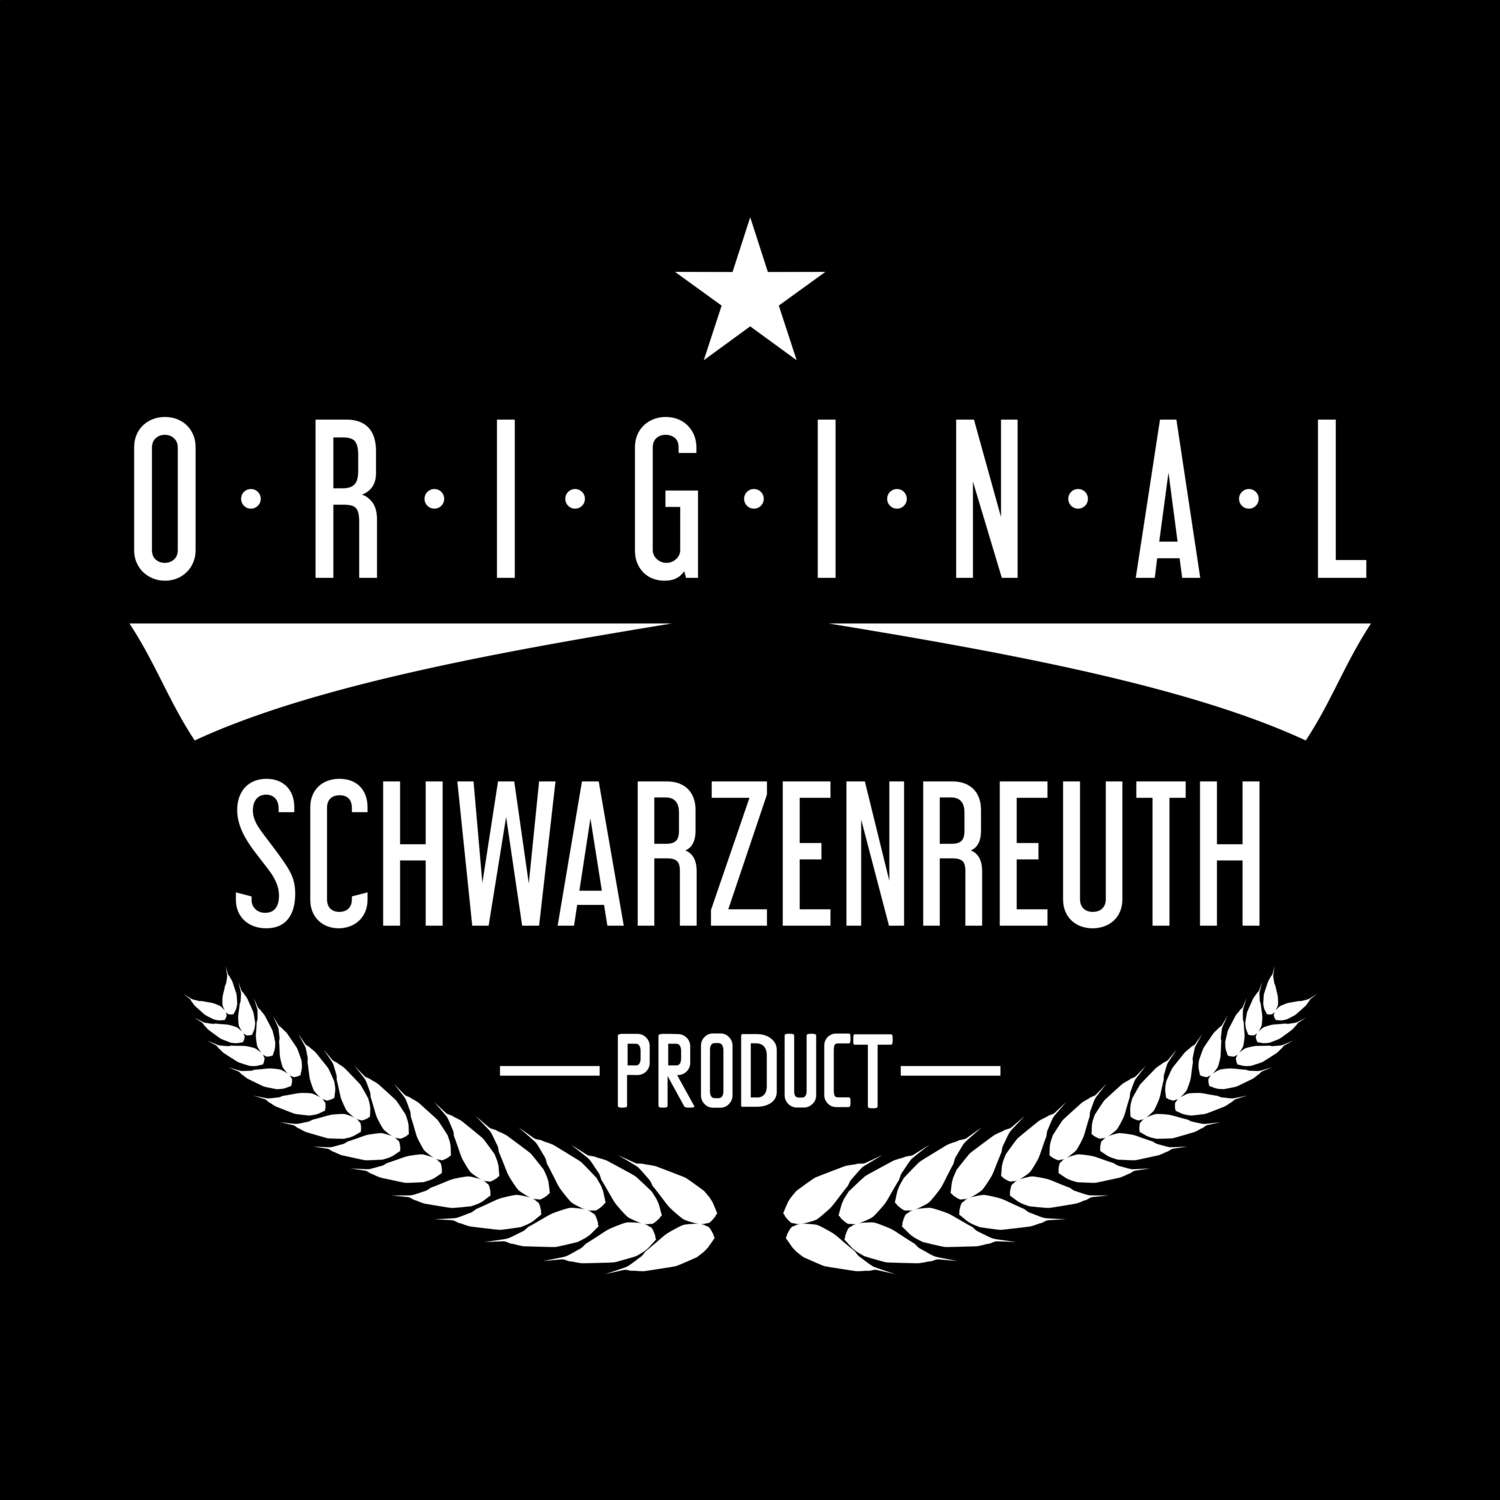 Schwarzenreuth T-Shirt »Original Product«